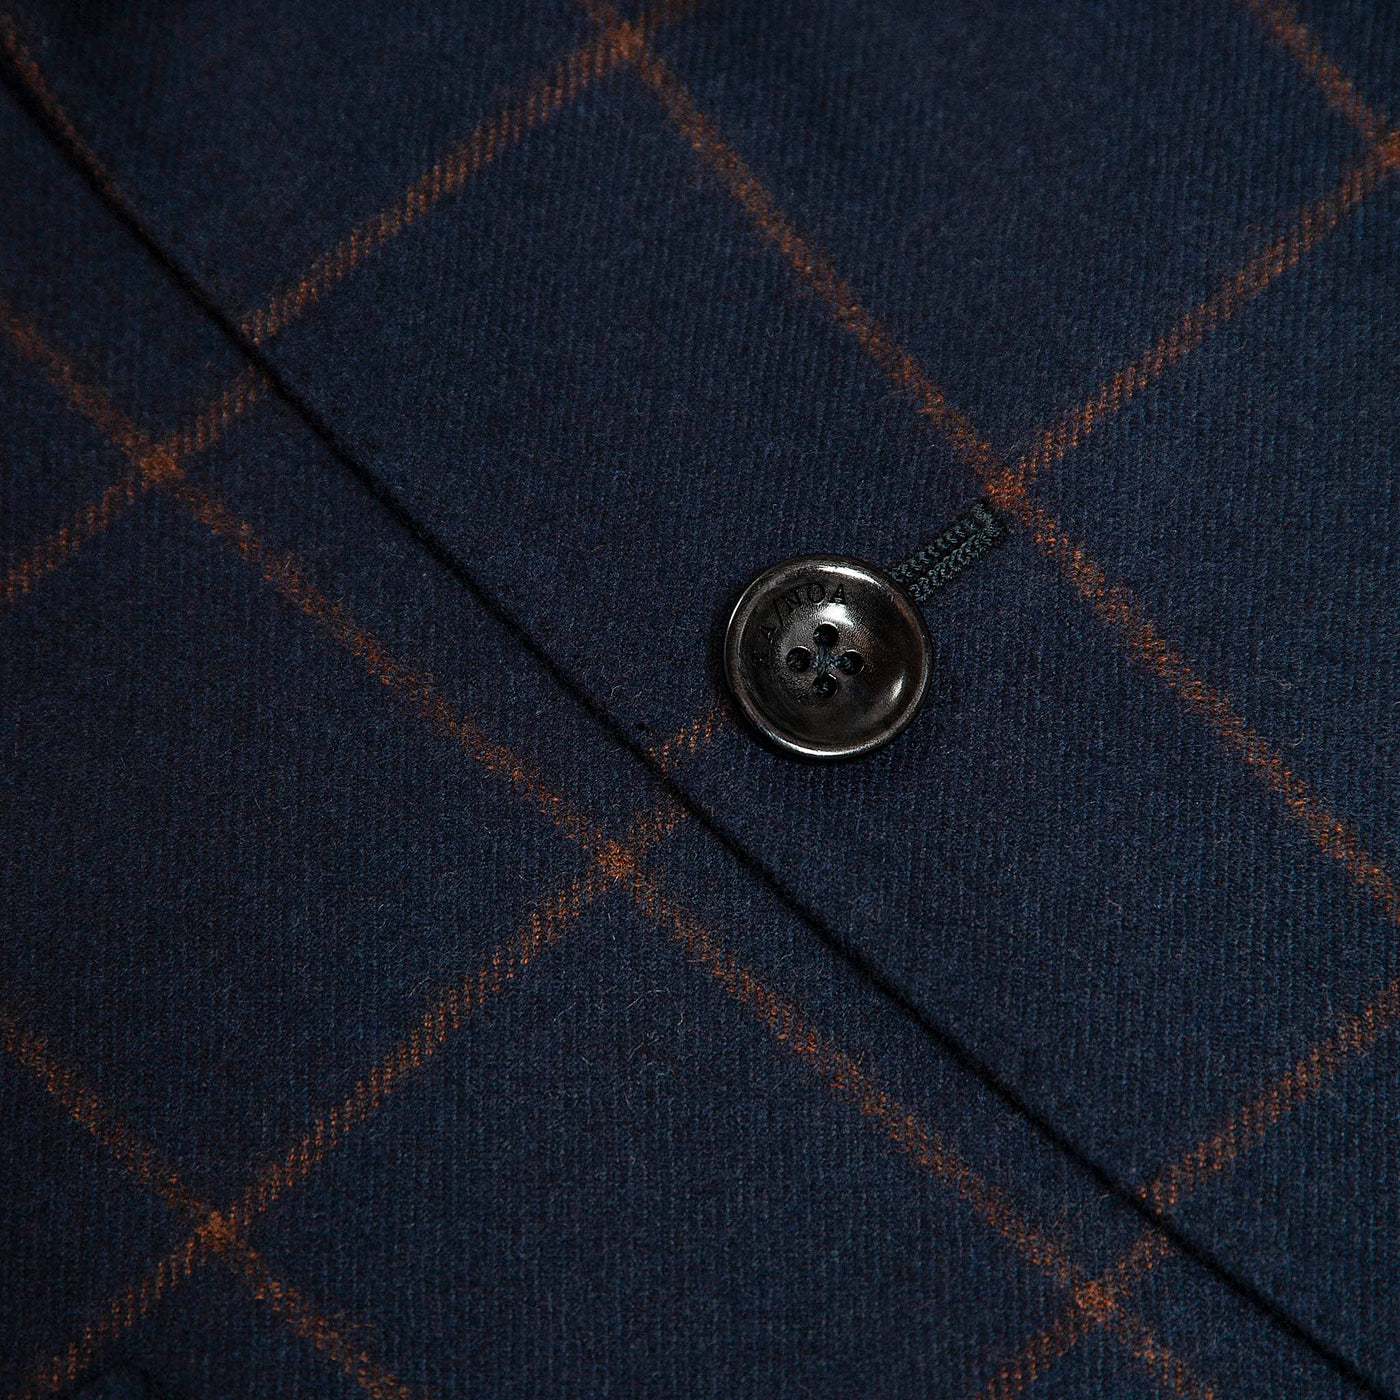 Benoit blazer flannel check 100% cashmere (Blue and Brown)